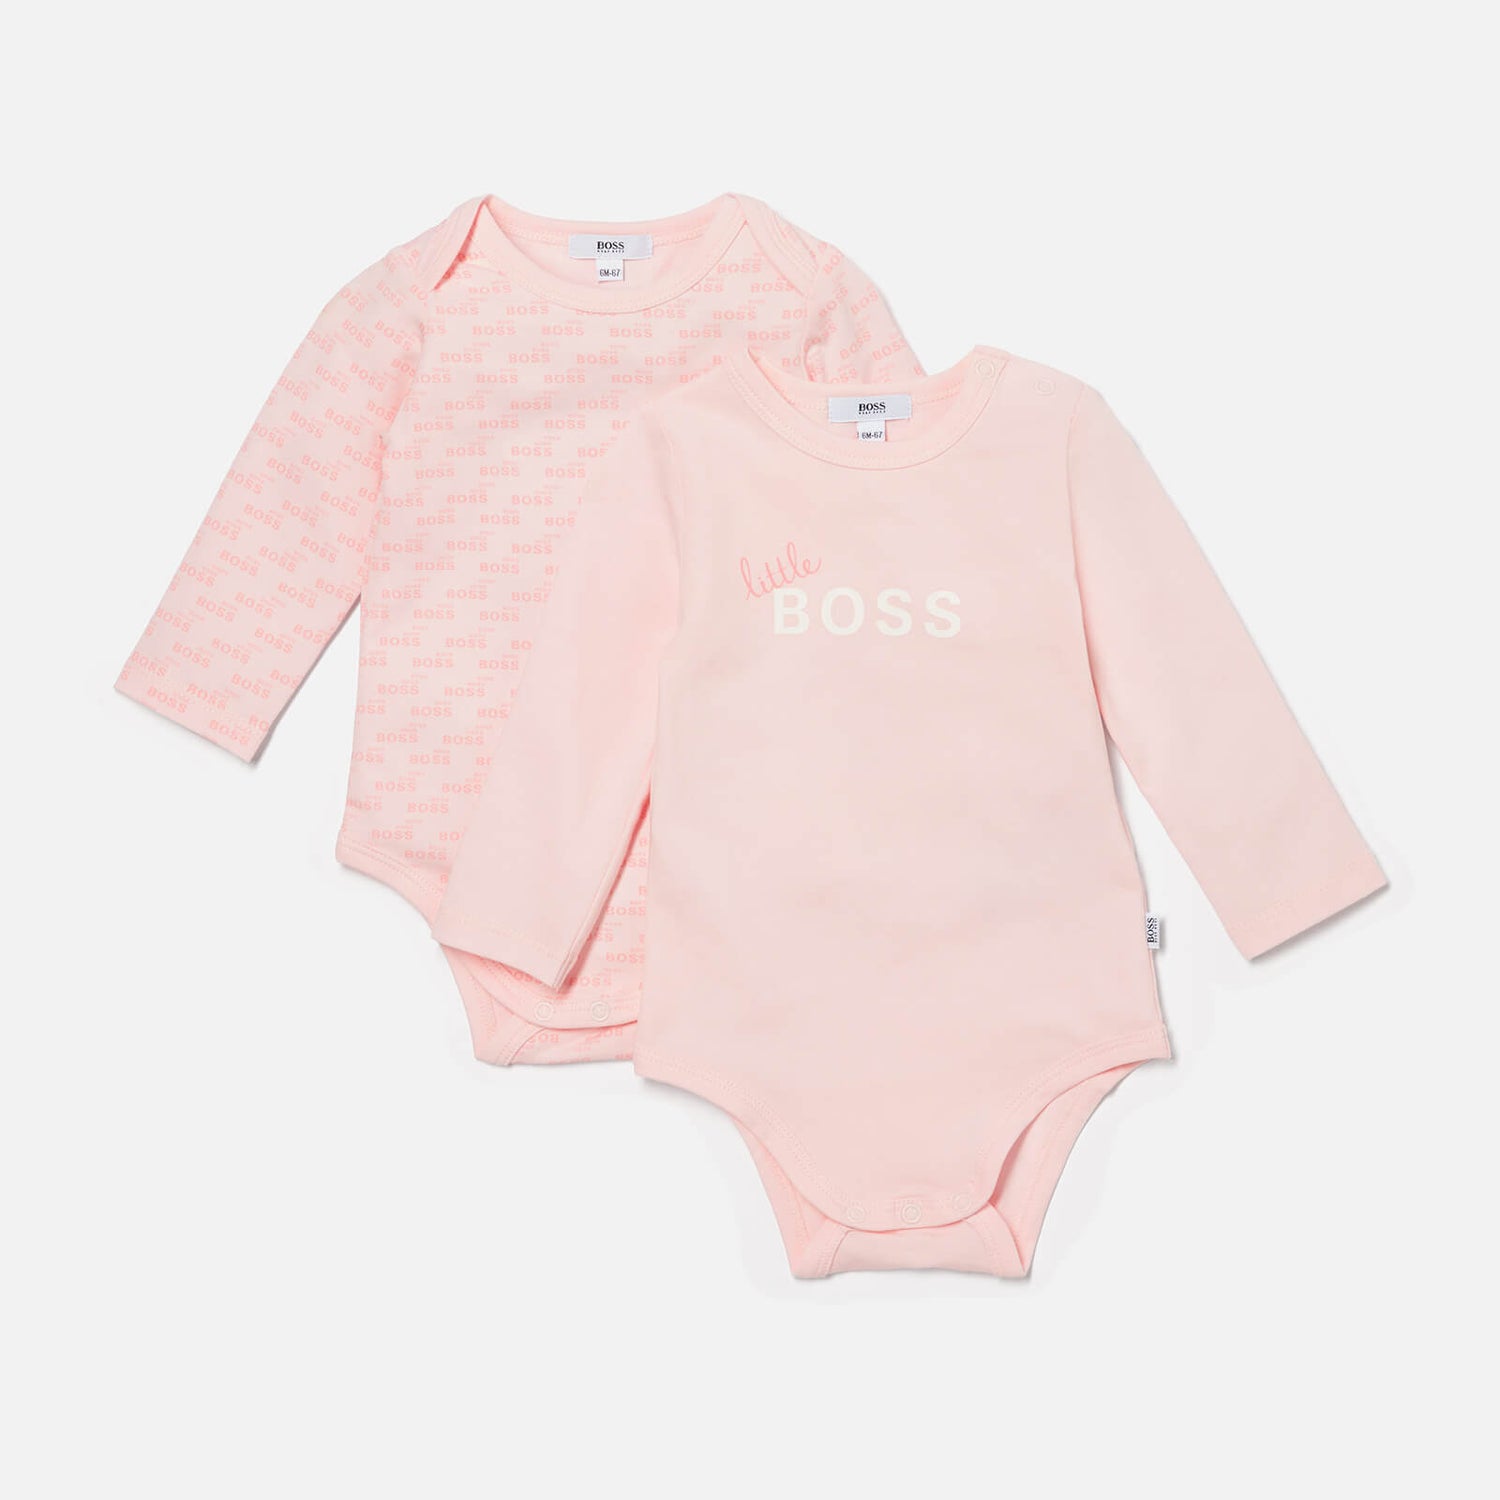 Hugo Boss Baby Bodysuits - Set Of 2 - Pink Pale